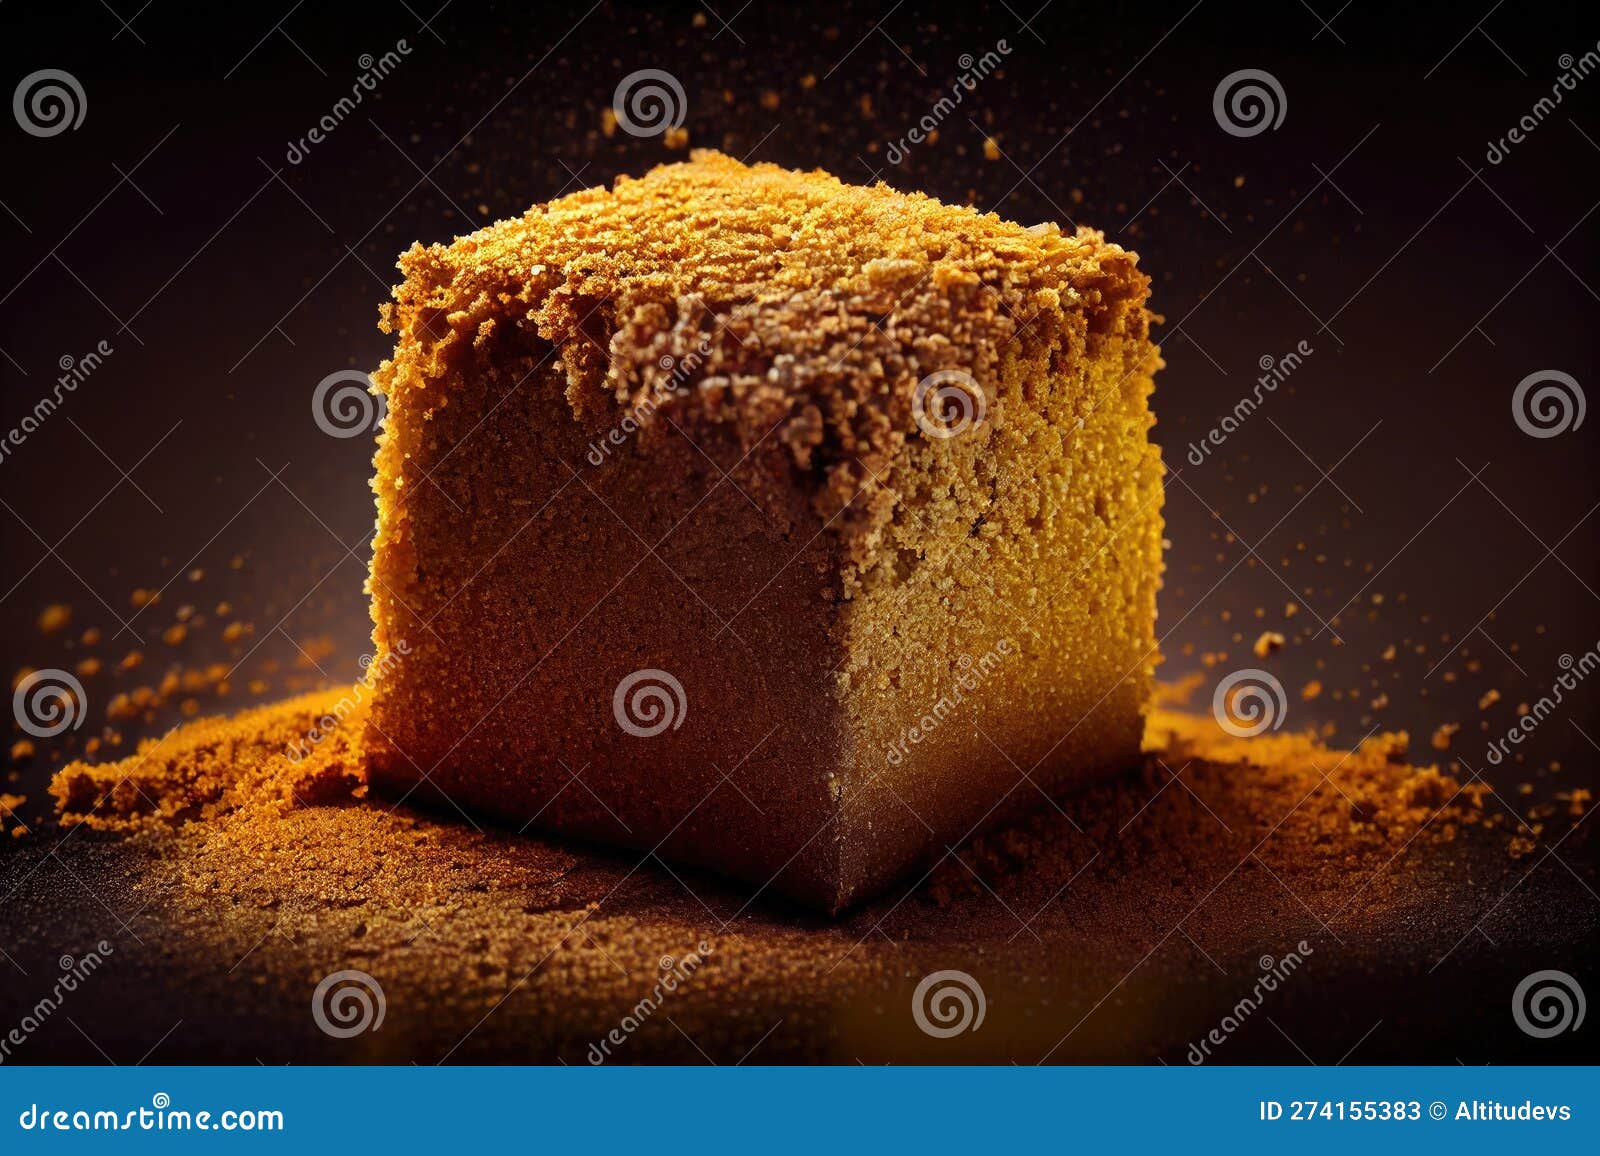 Hostess Twinkies Original Golden Sponge Cake with Creamy Filling Singl |  The Lolly Barn